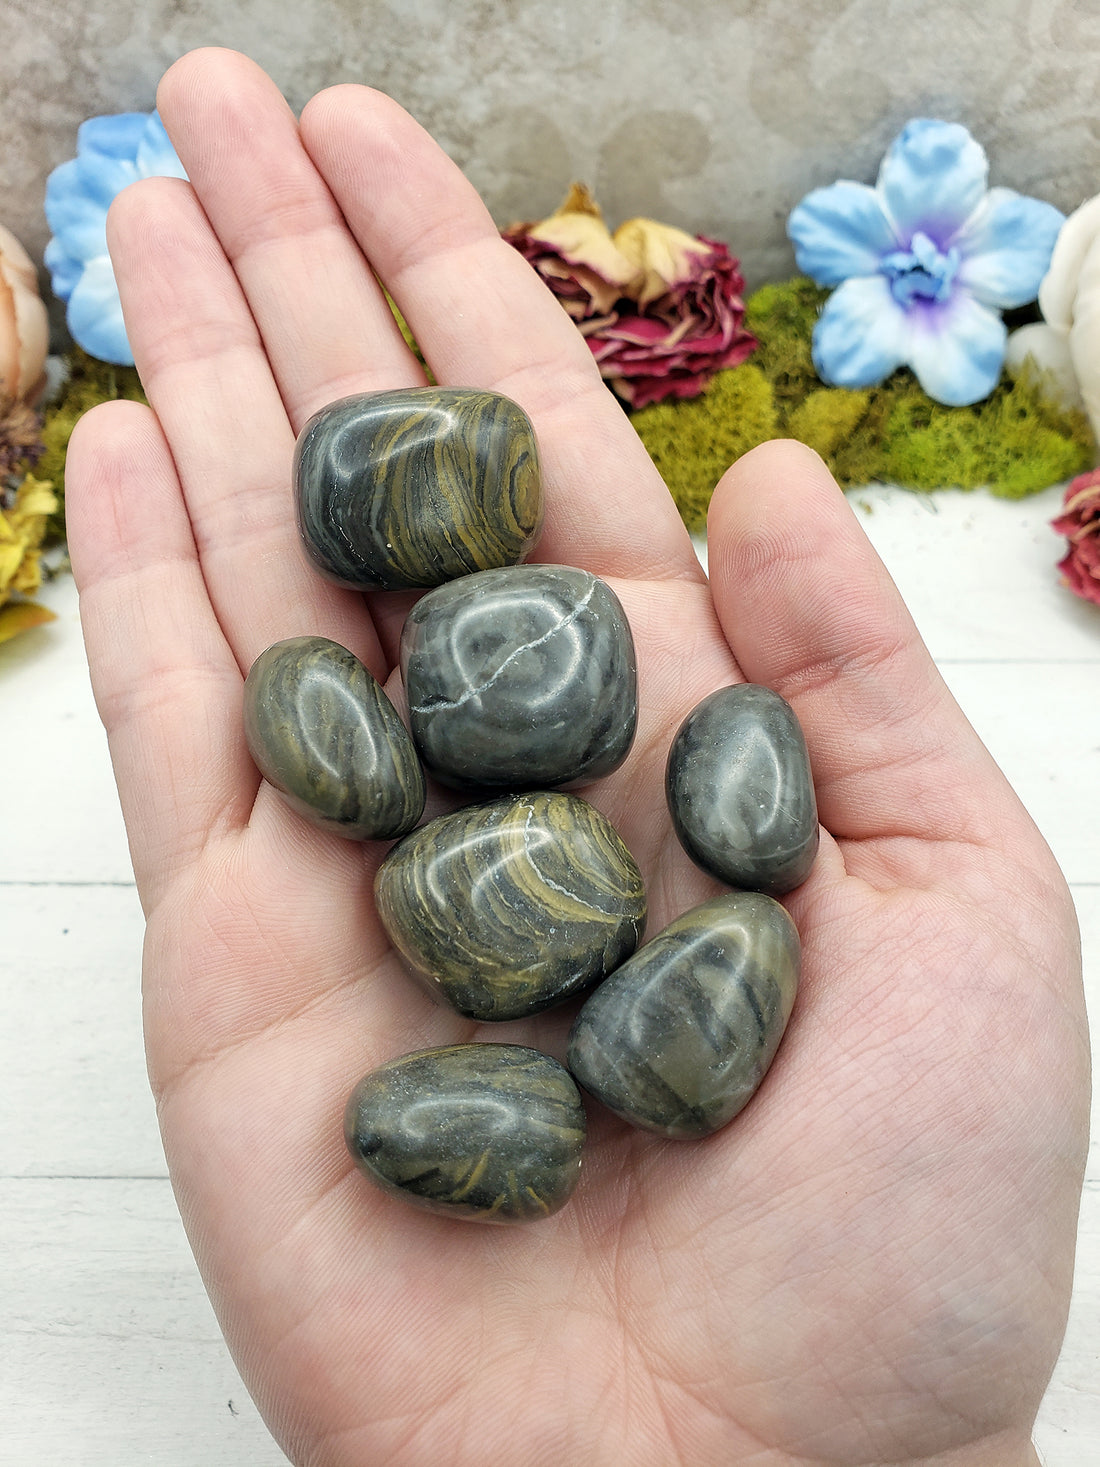 Camouflage jasper stone pieces in hand